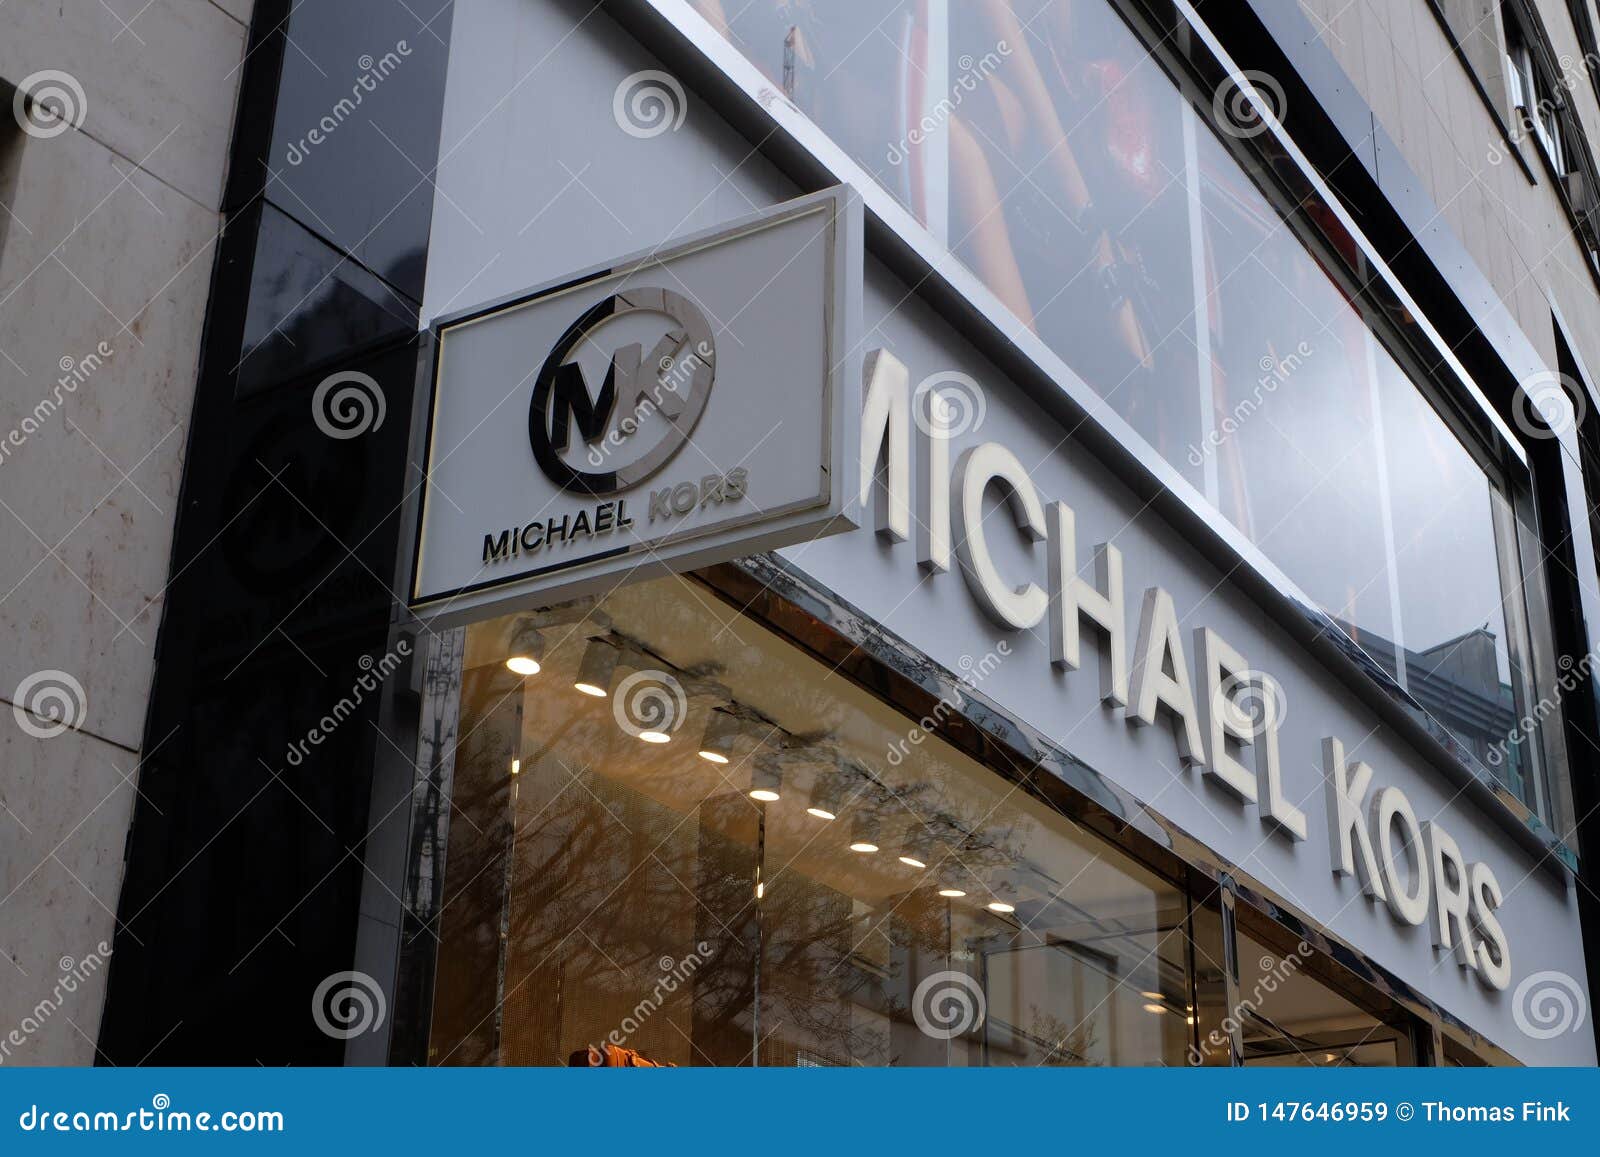 Michael Kors Shop Logo in Frankfurt Editorial Stock Image - Image of brand,  europe: 147646959